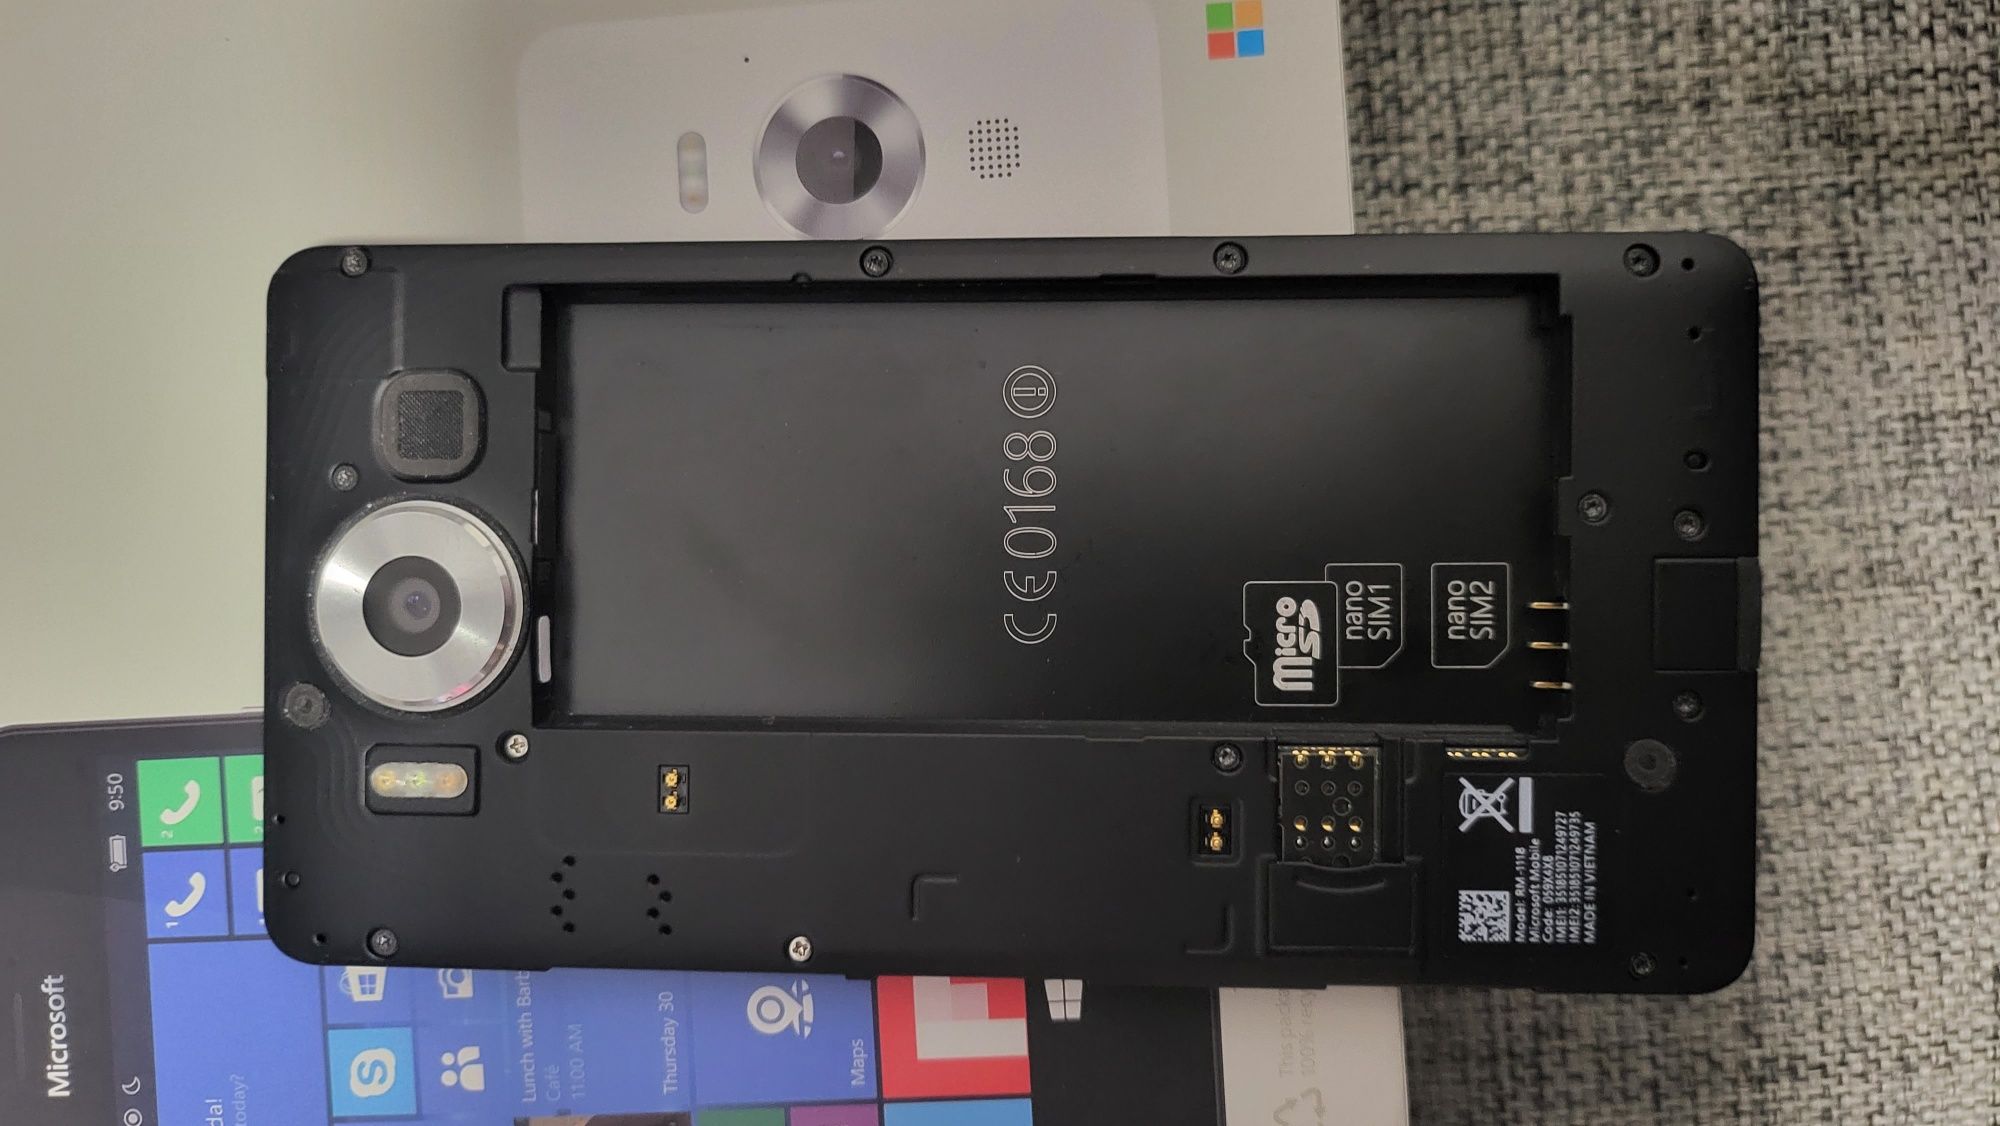 Nokia lumia 950 dual sim